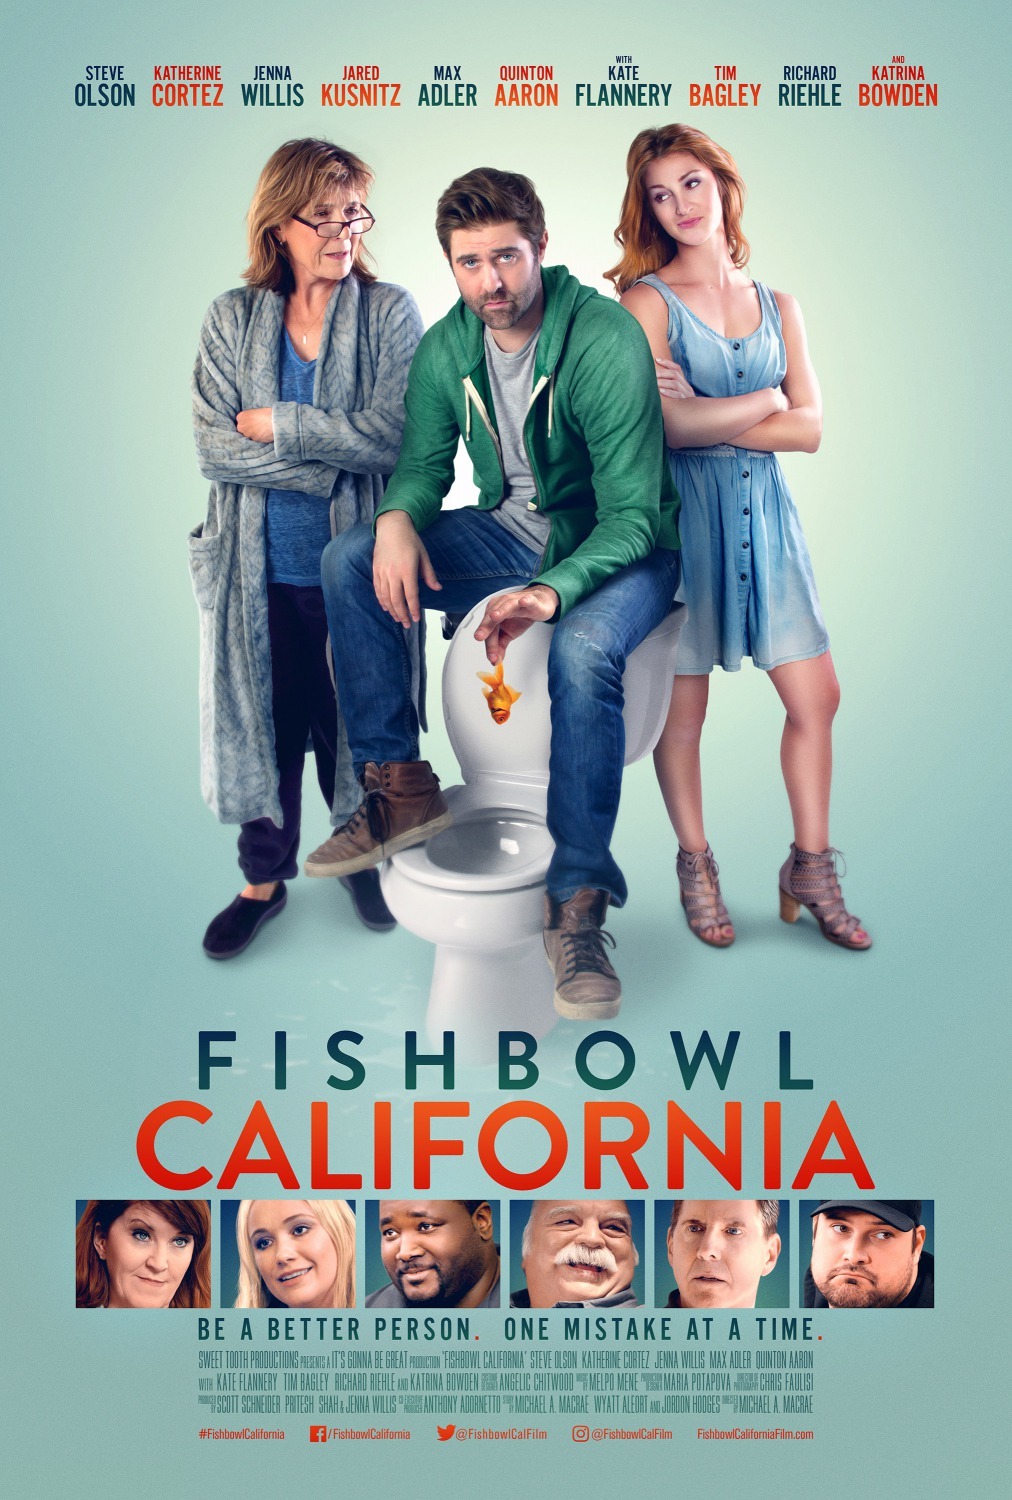 Nonton film Fishbowl California layarkaca21 indoxx1 ganool online streaming terbaru